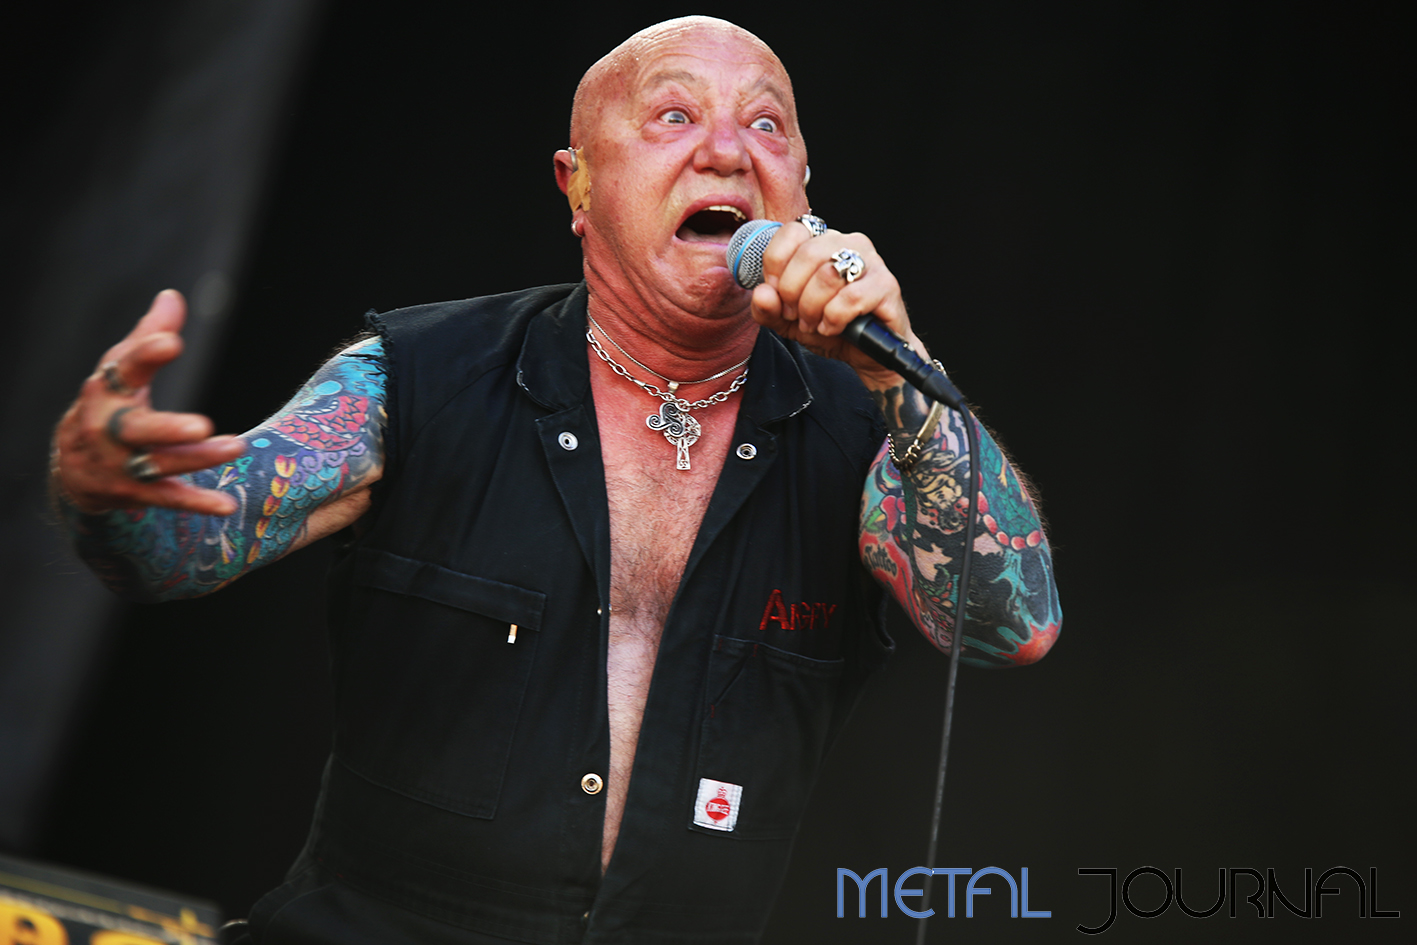 rose tattoo - leyendas del rock 2019 metal journal pic 5